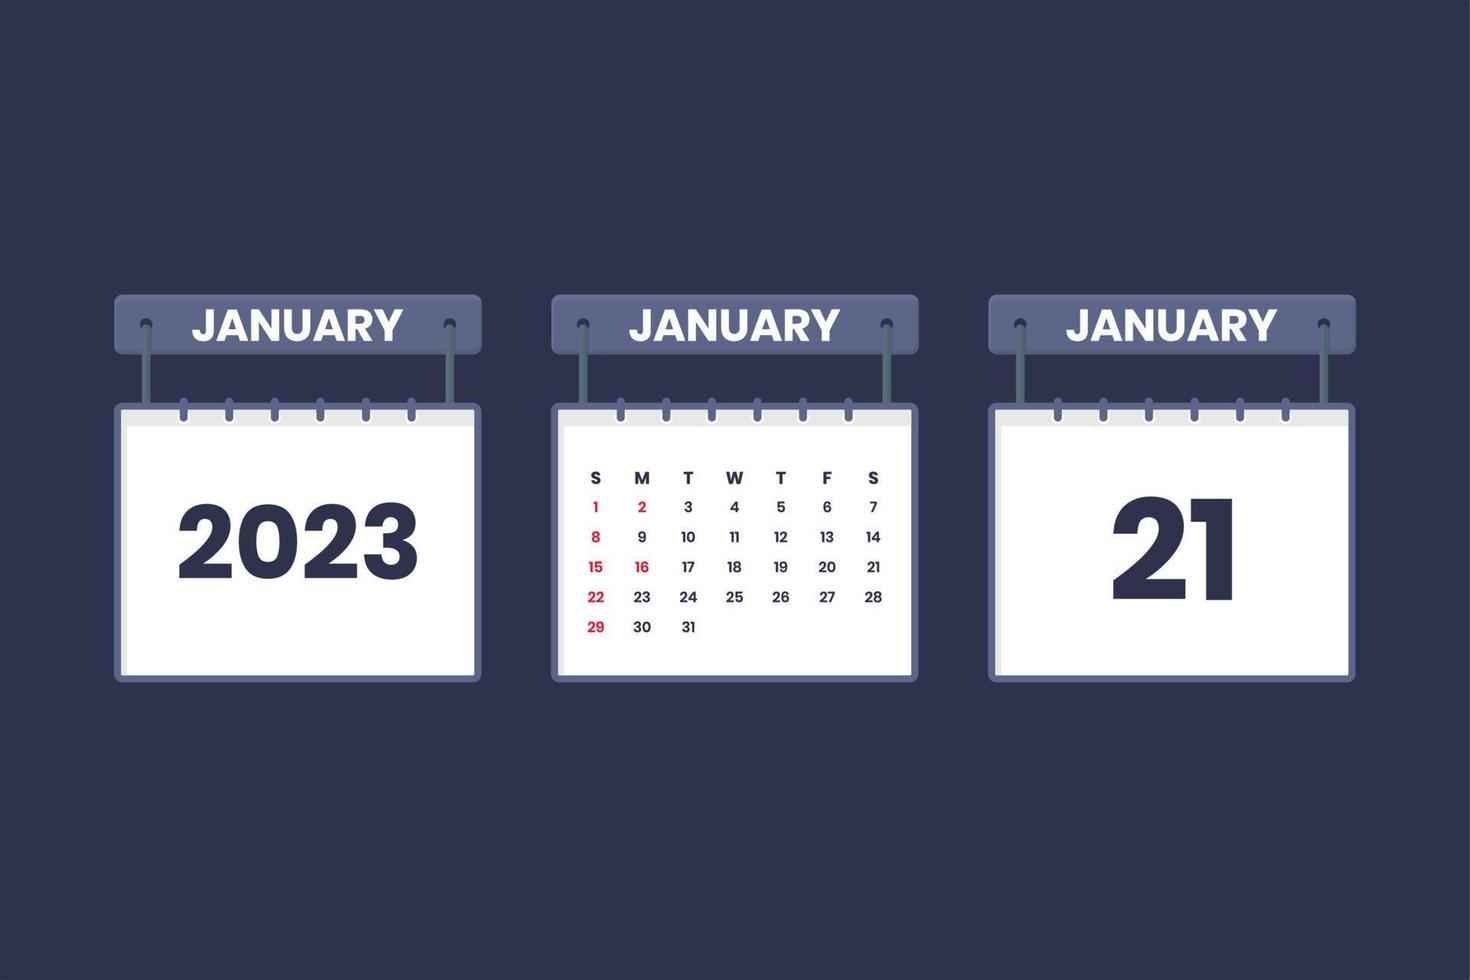 21 gennaio 2023 calendario icona per orario, appuntamento, importante Data concetto vettore